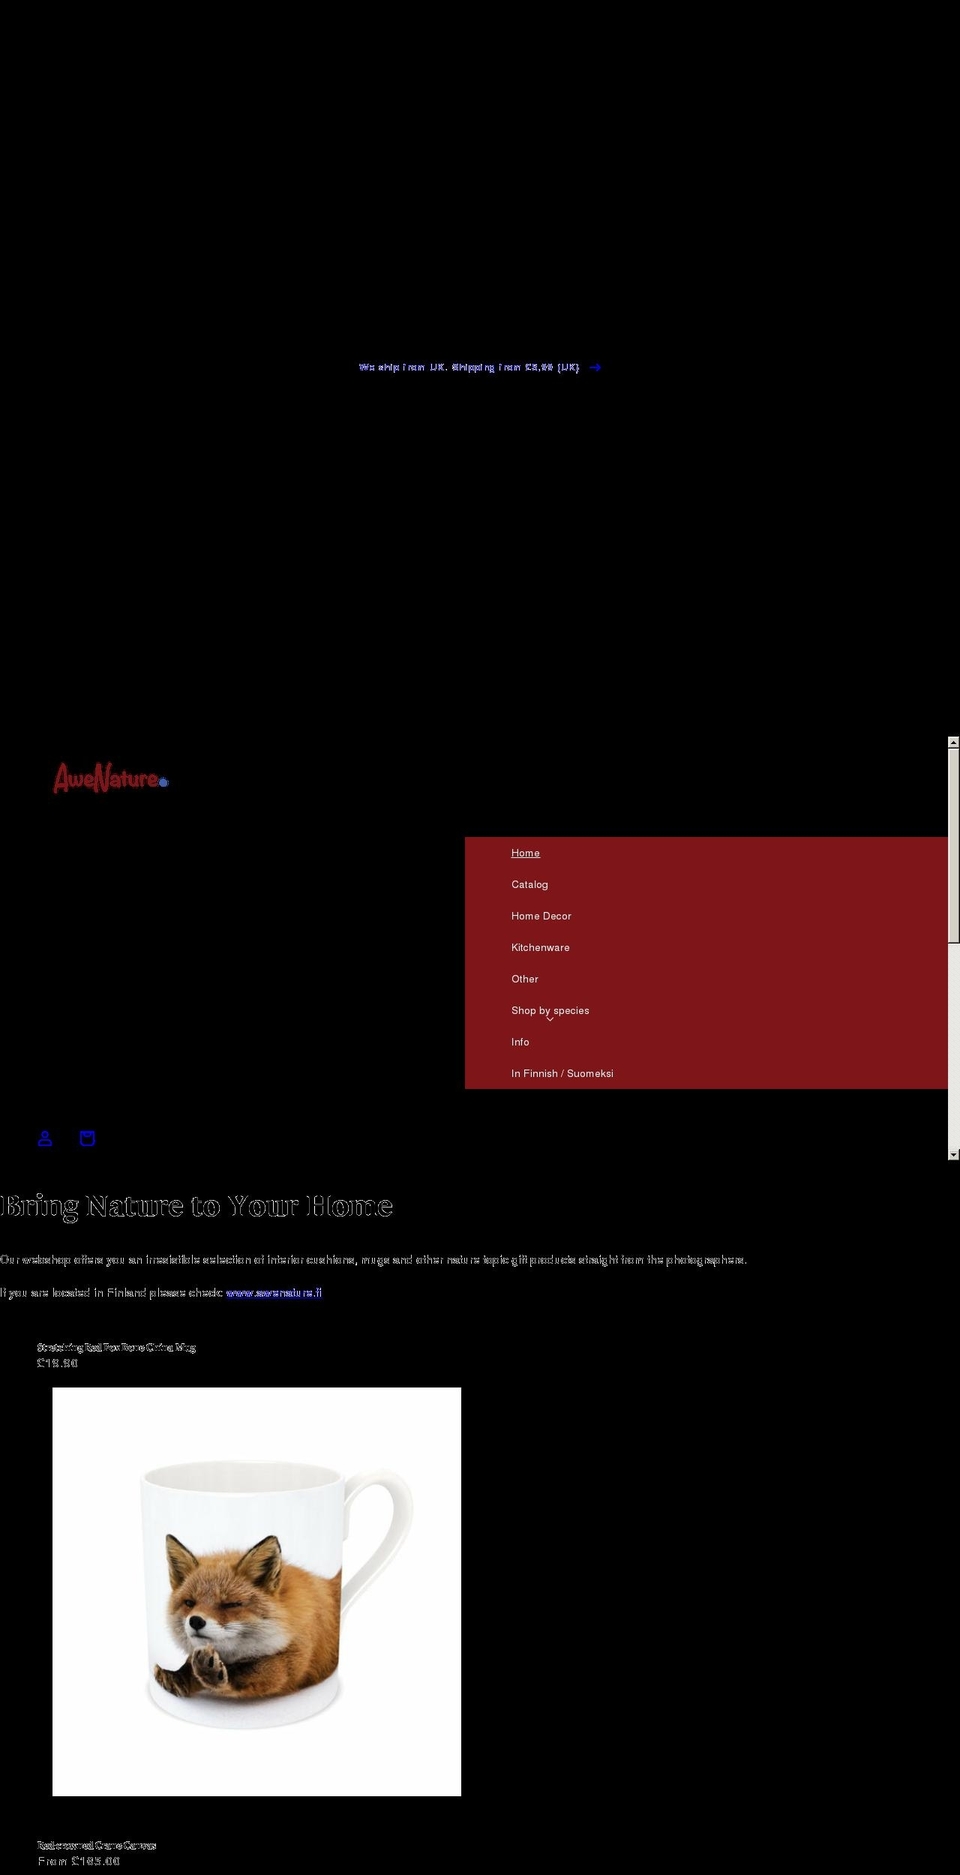 awenature.design shopify website screenshot